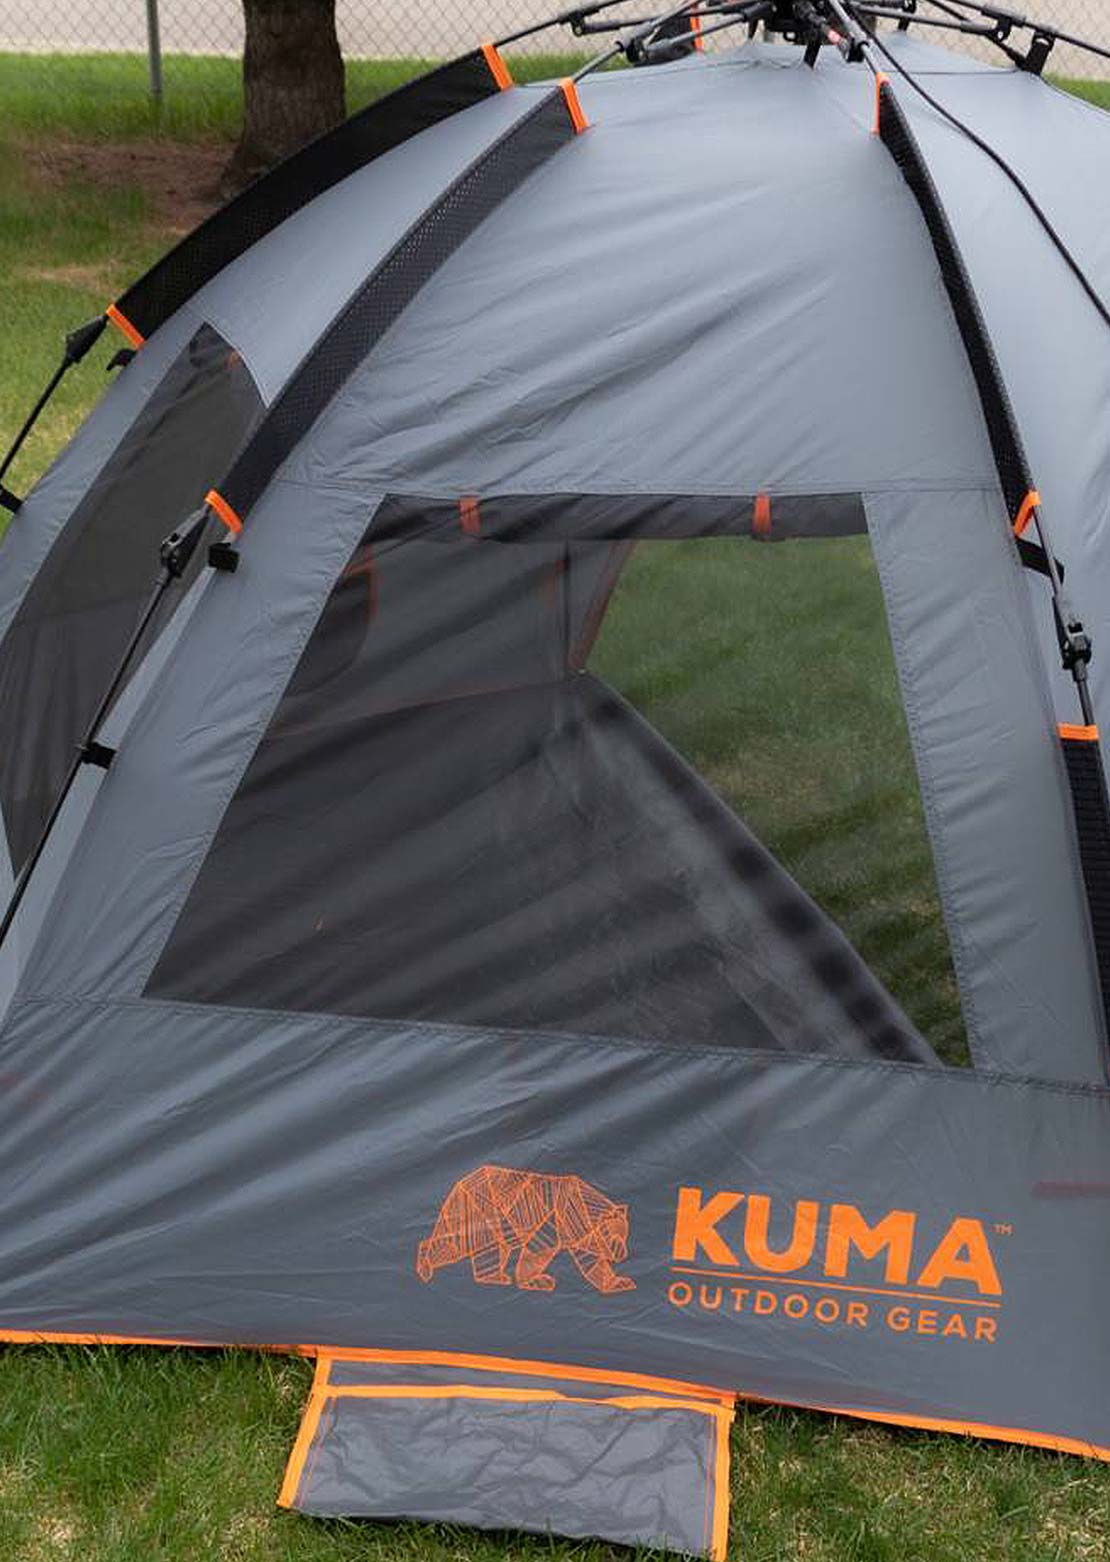 Kuma Outdoor Gear Keep It Cool Instant Shelter